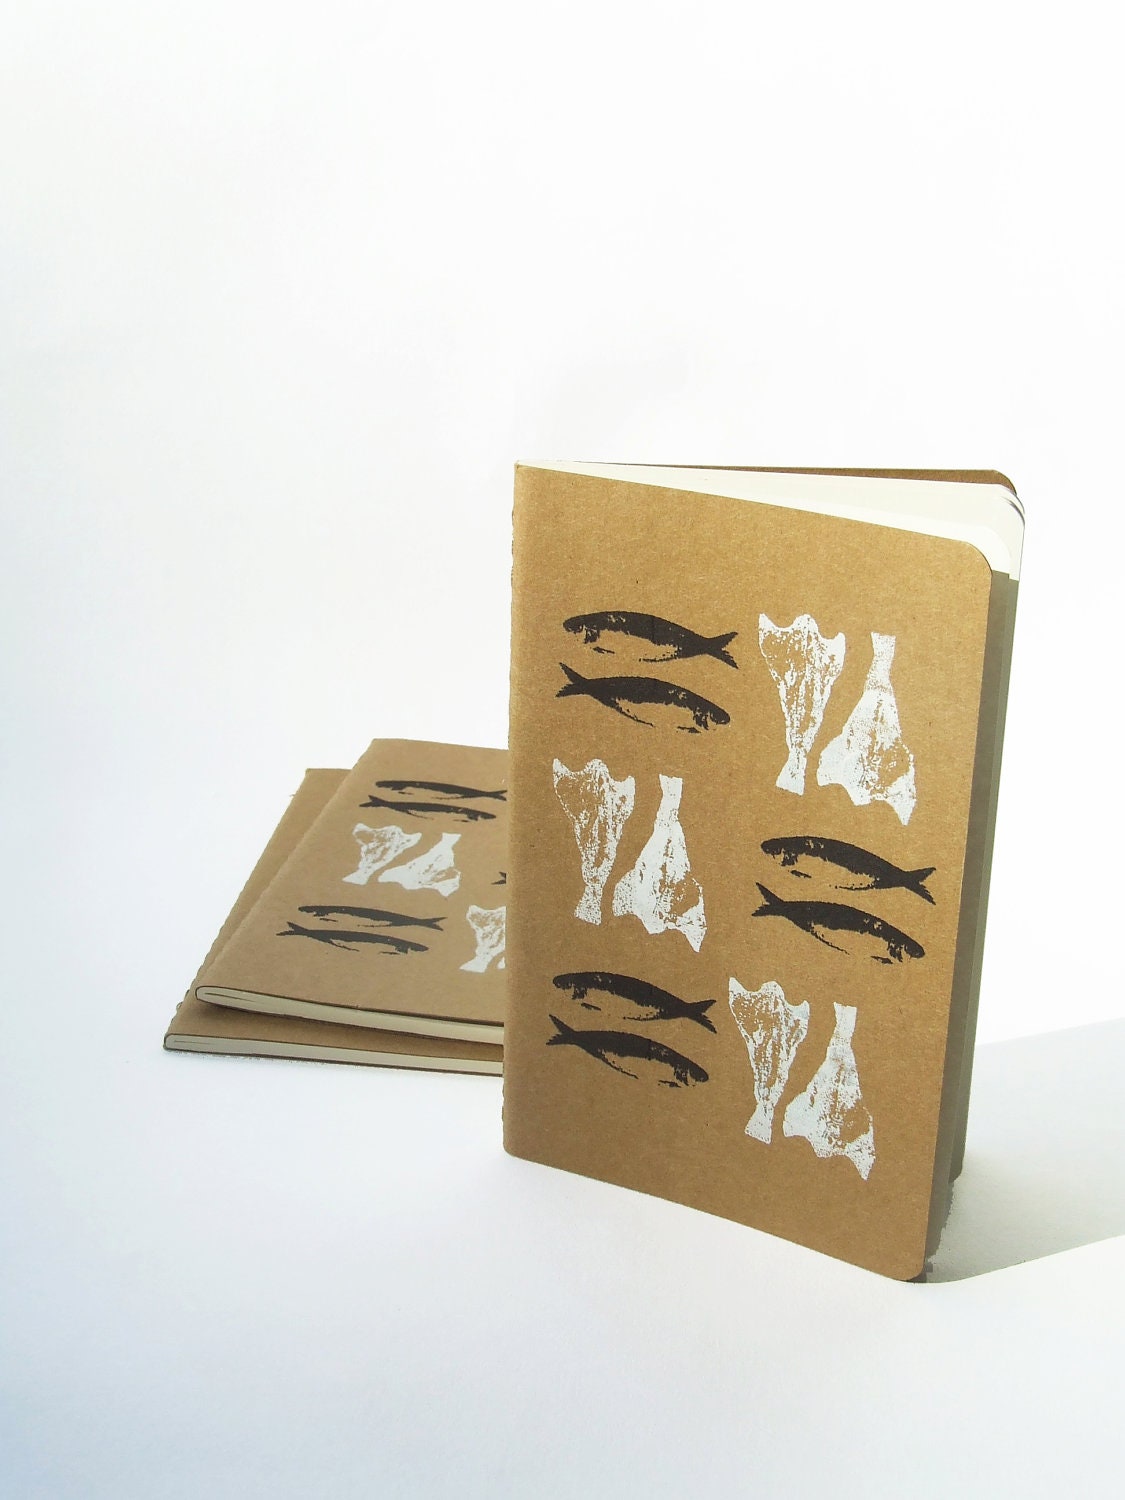 Pocket size Notebook with Sardines & Bacalhau by Alfamarama